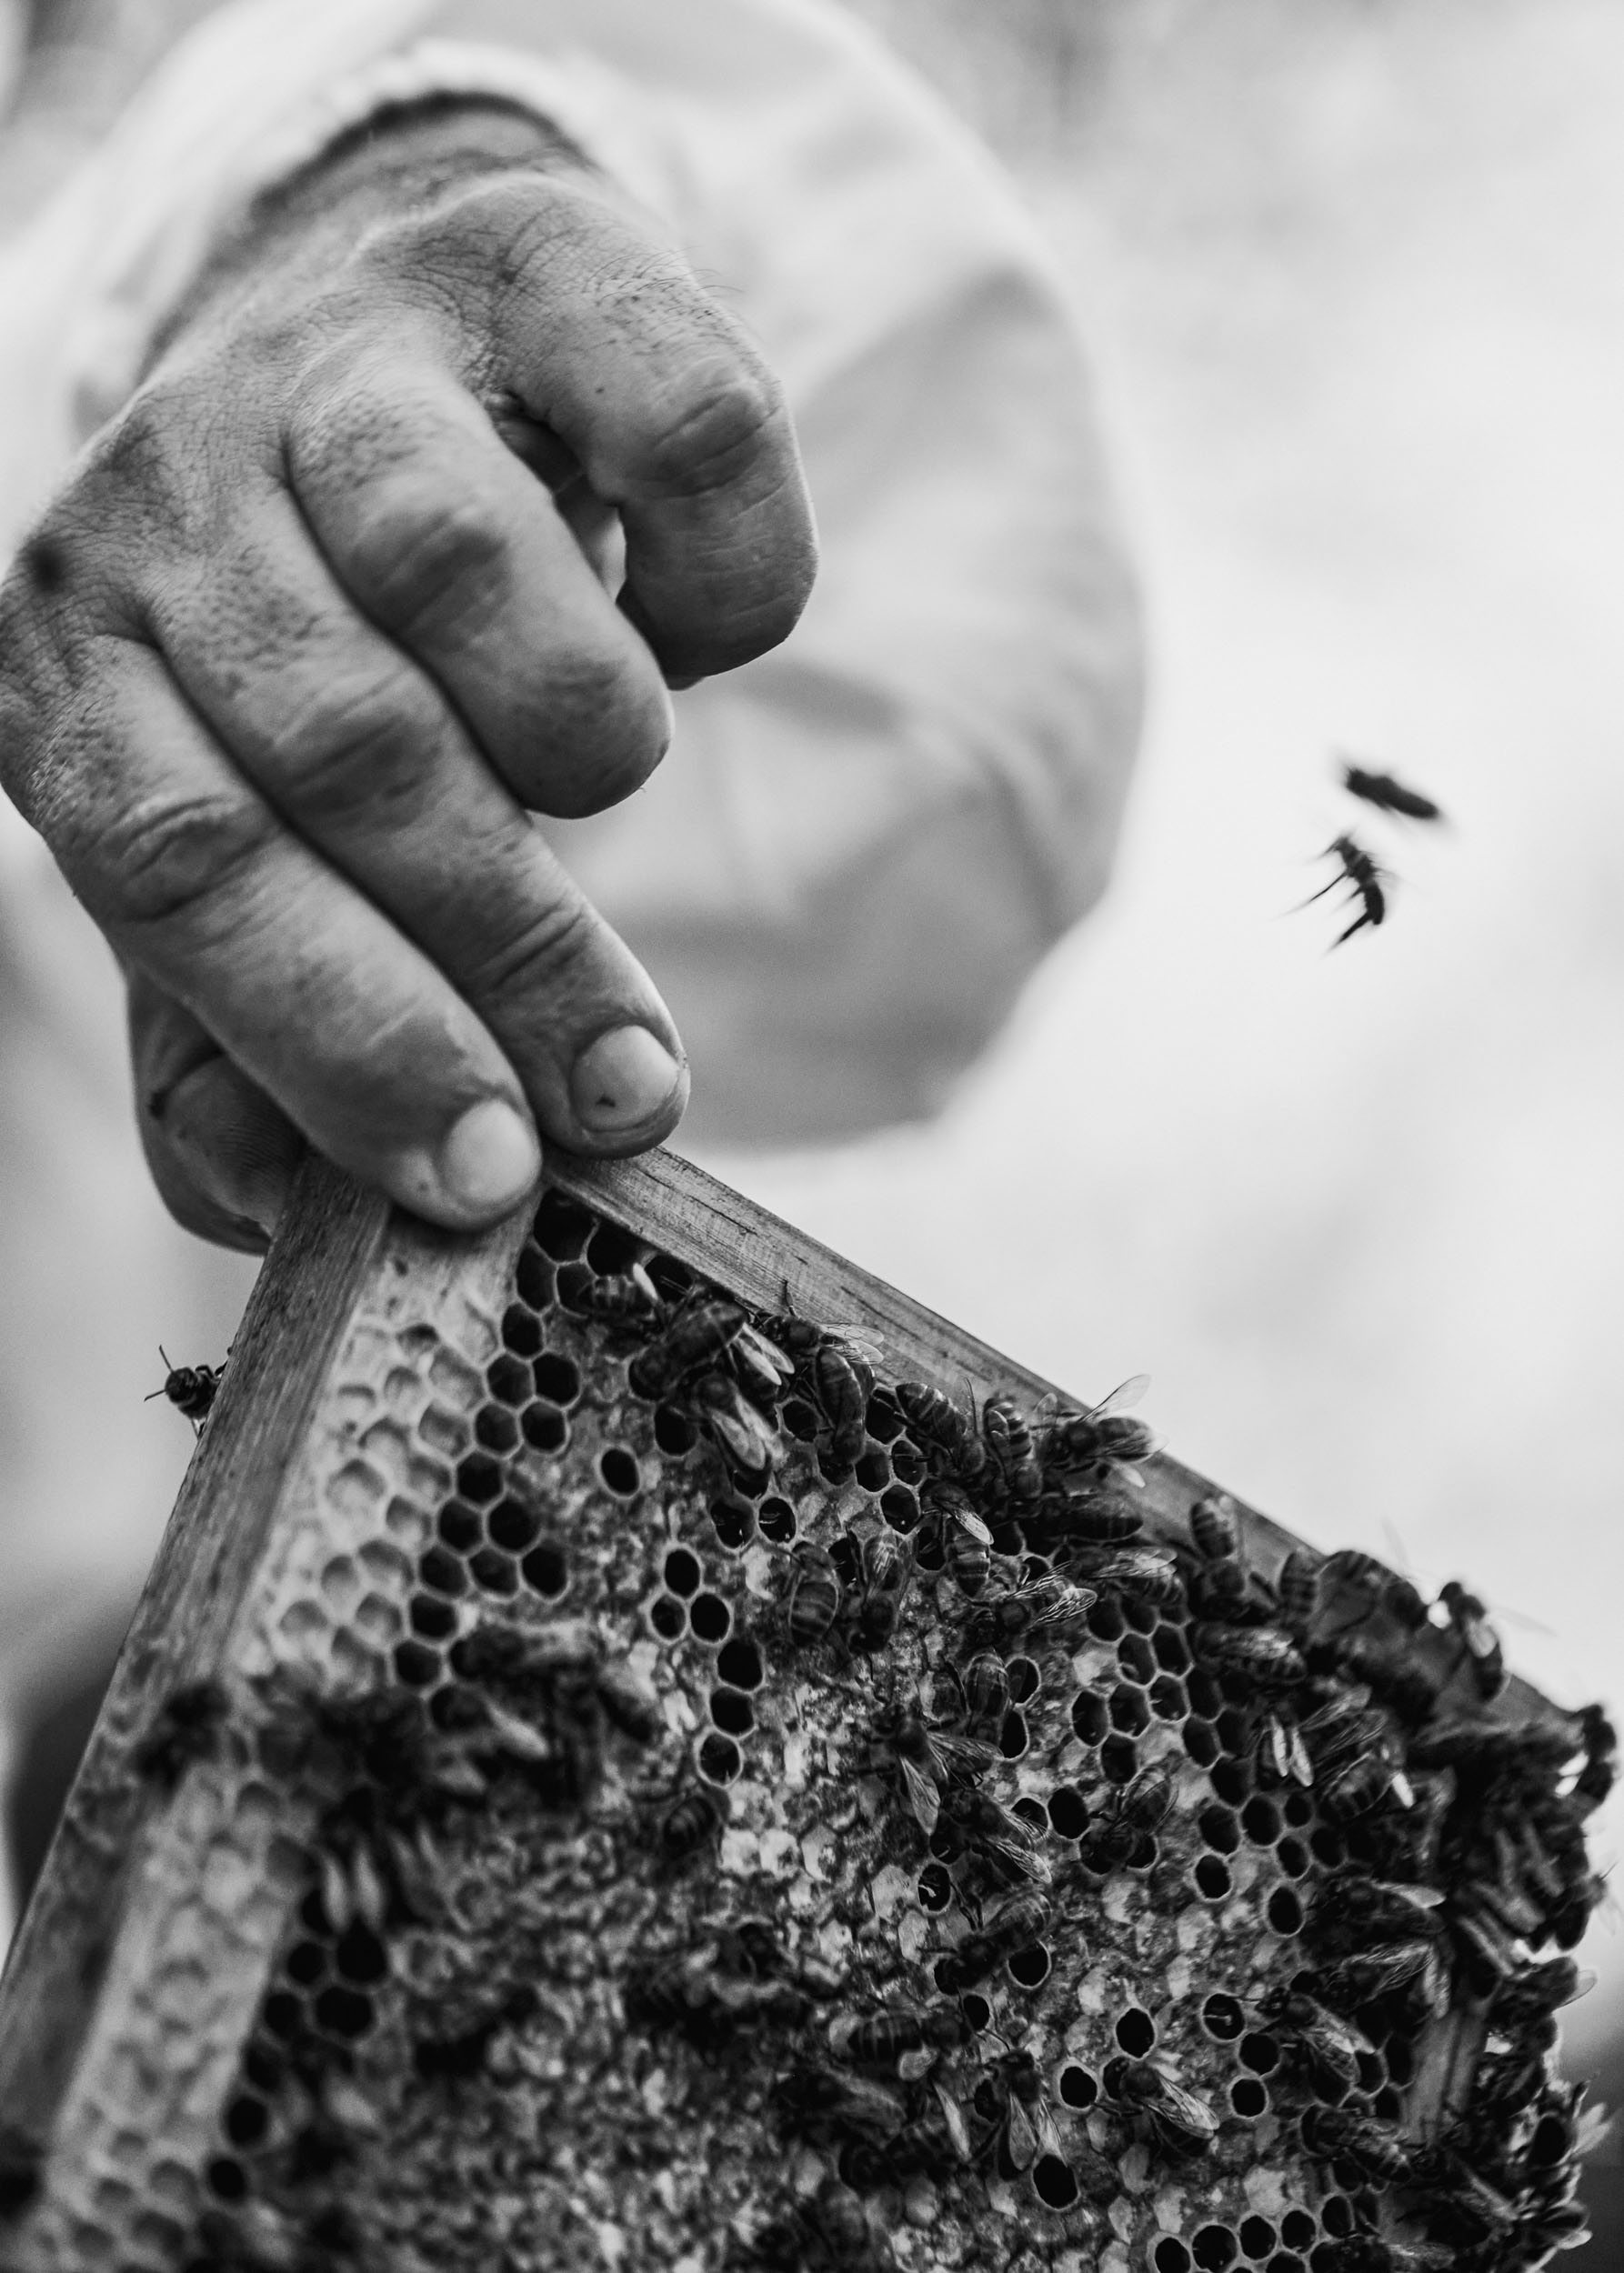 Beekeeper in Mallorca, Spain by travel photographer Nico Schinco